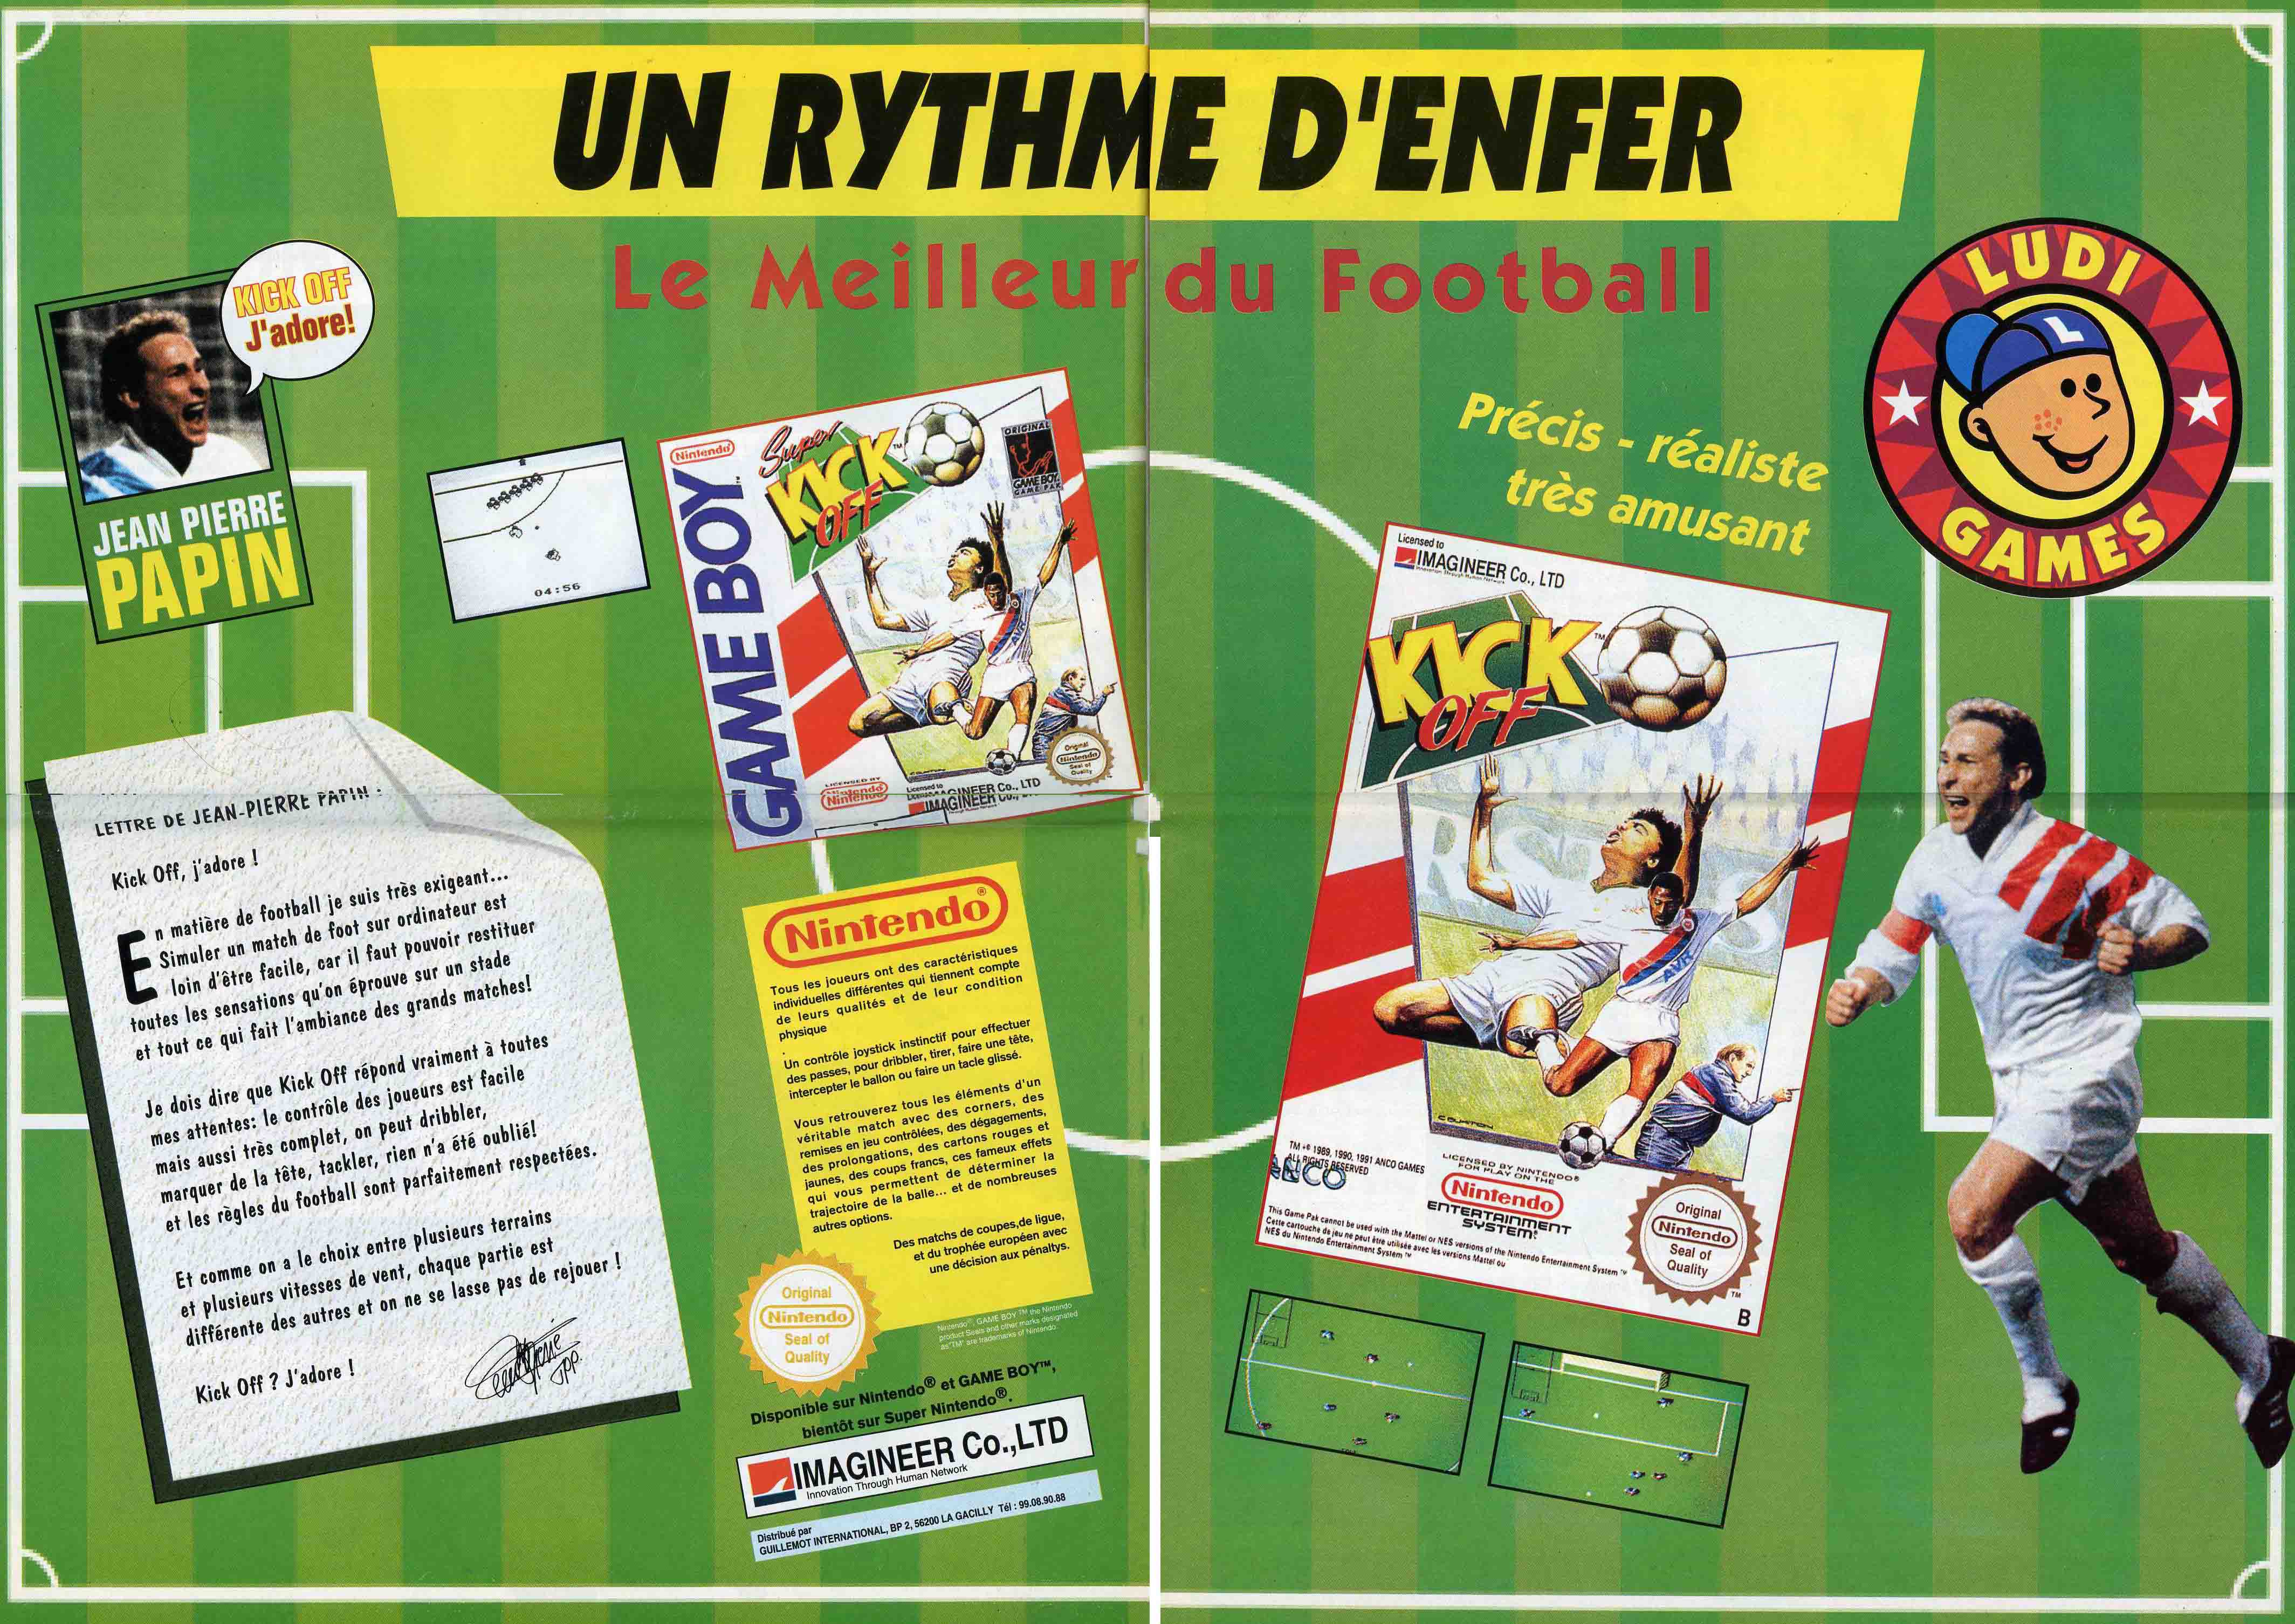 "Le Meilleur du Football" Kick Off [Nintendo / GameBoy]